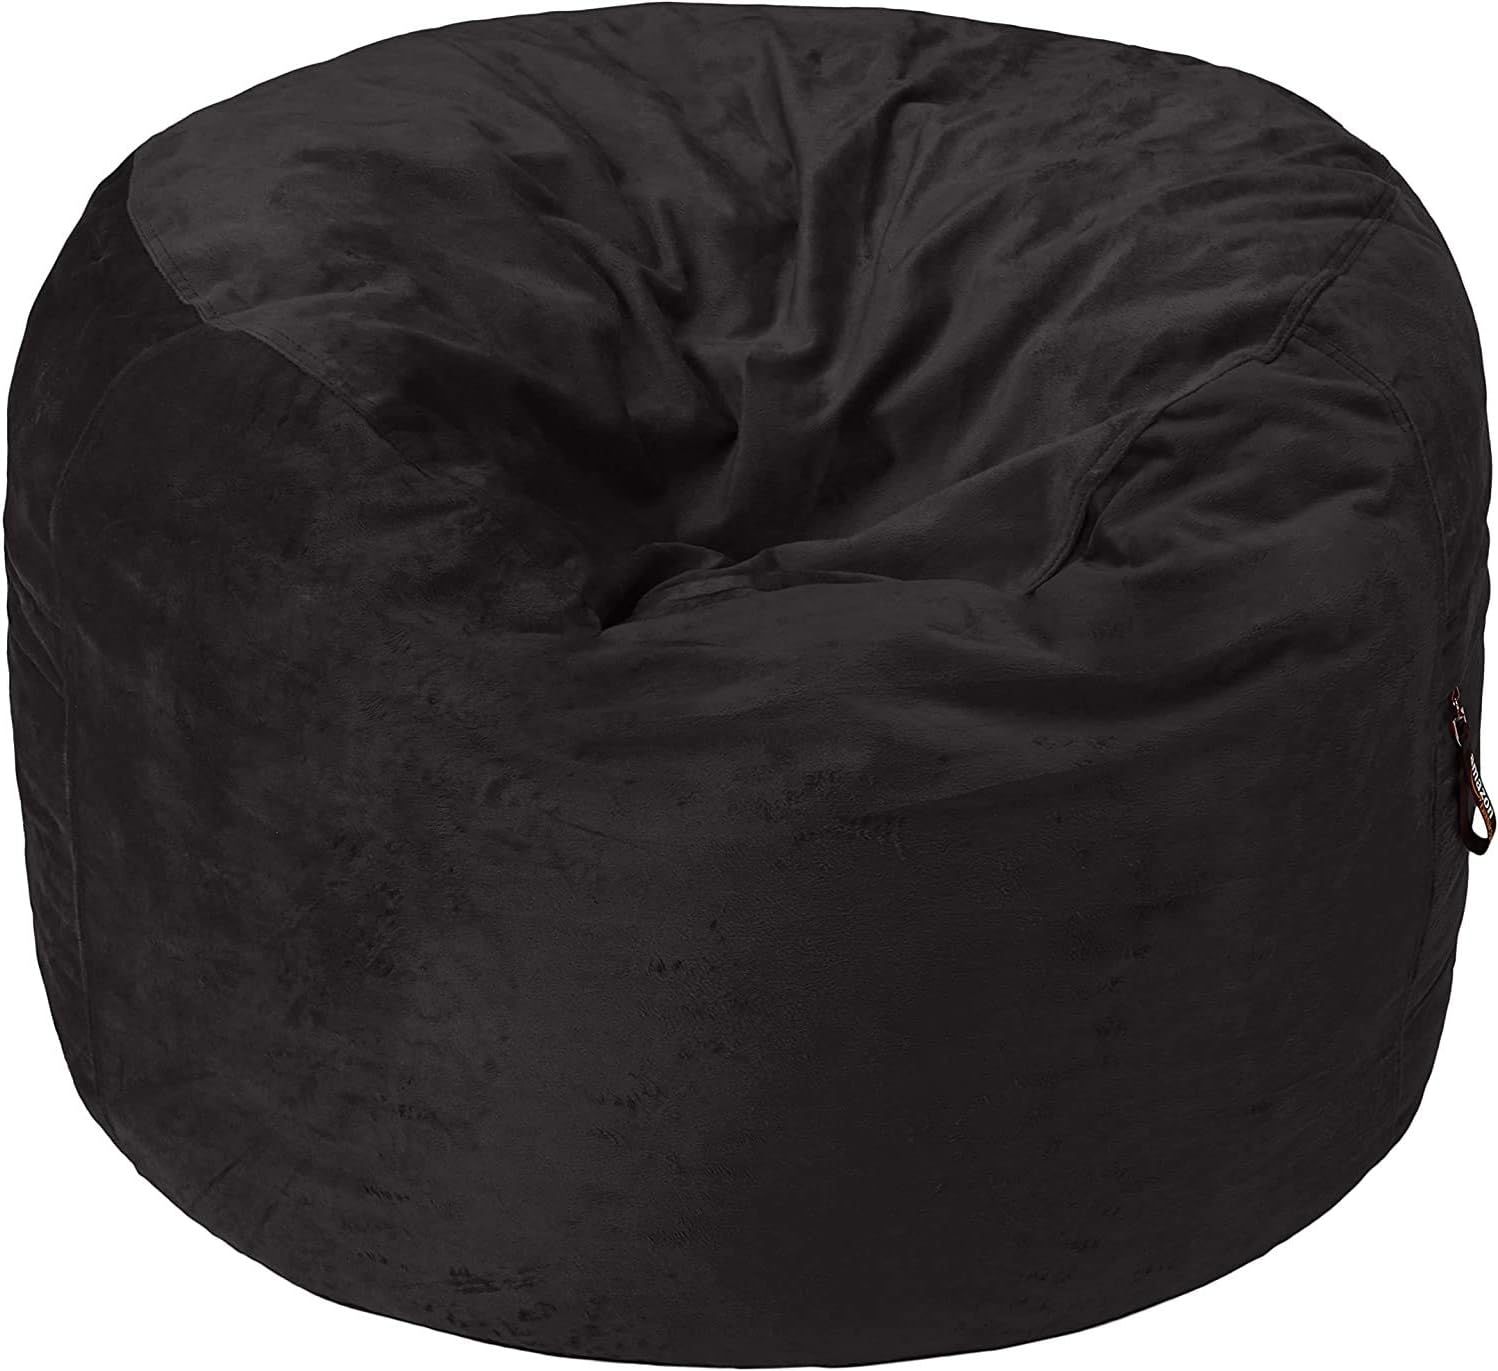 Amazon Basics Memory Foam Filled Bean Bag Chair with Microfiber Cover - 3', Black | Amazon (US)